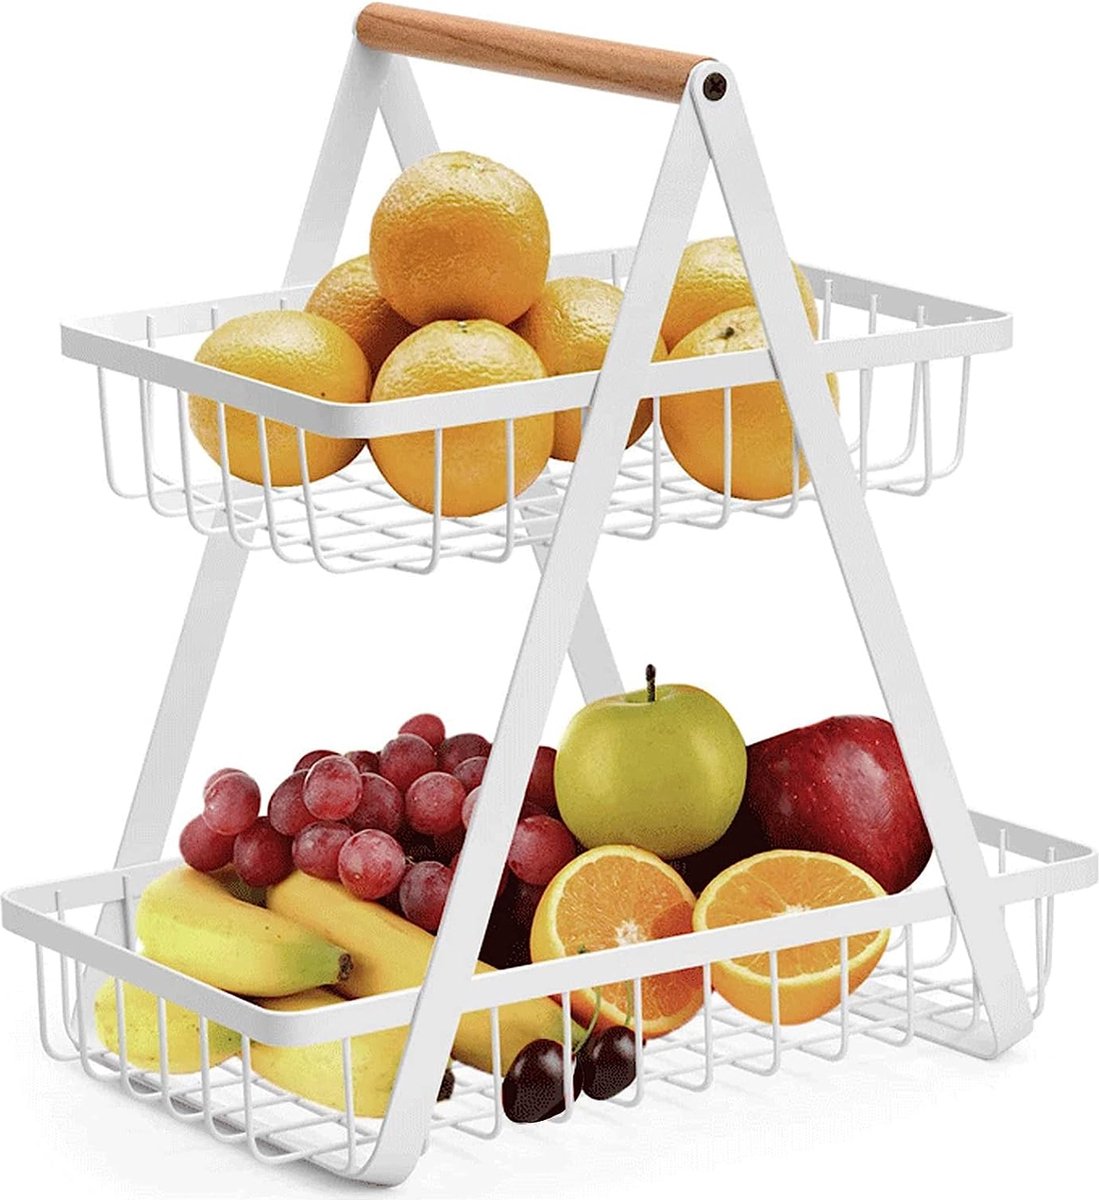 Fruitmand met 2 verdiepingen, 30 cm, fruithouder voor fruit, broodmand, groentenrek, fruitkom, groenteframe, fruitgroenten, brood, snacks mand (wit, vierkant)